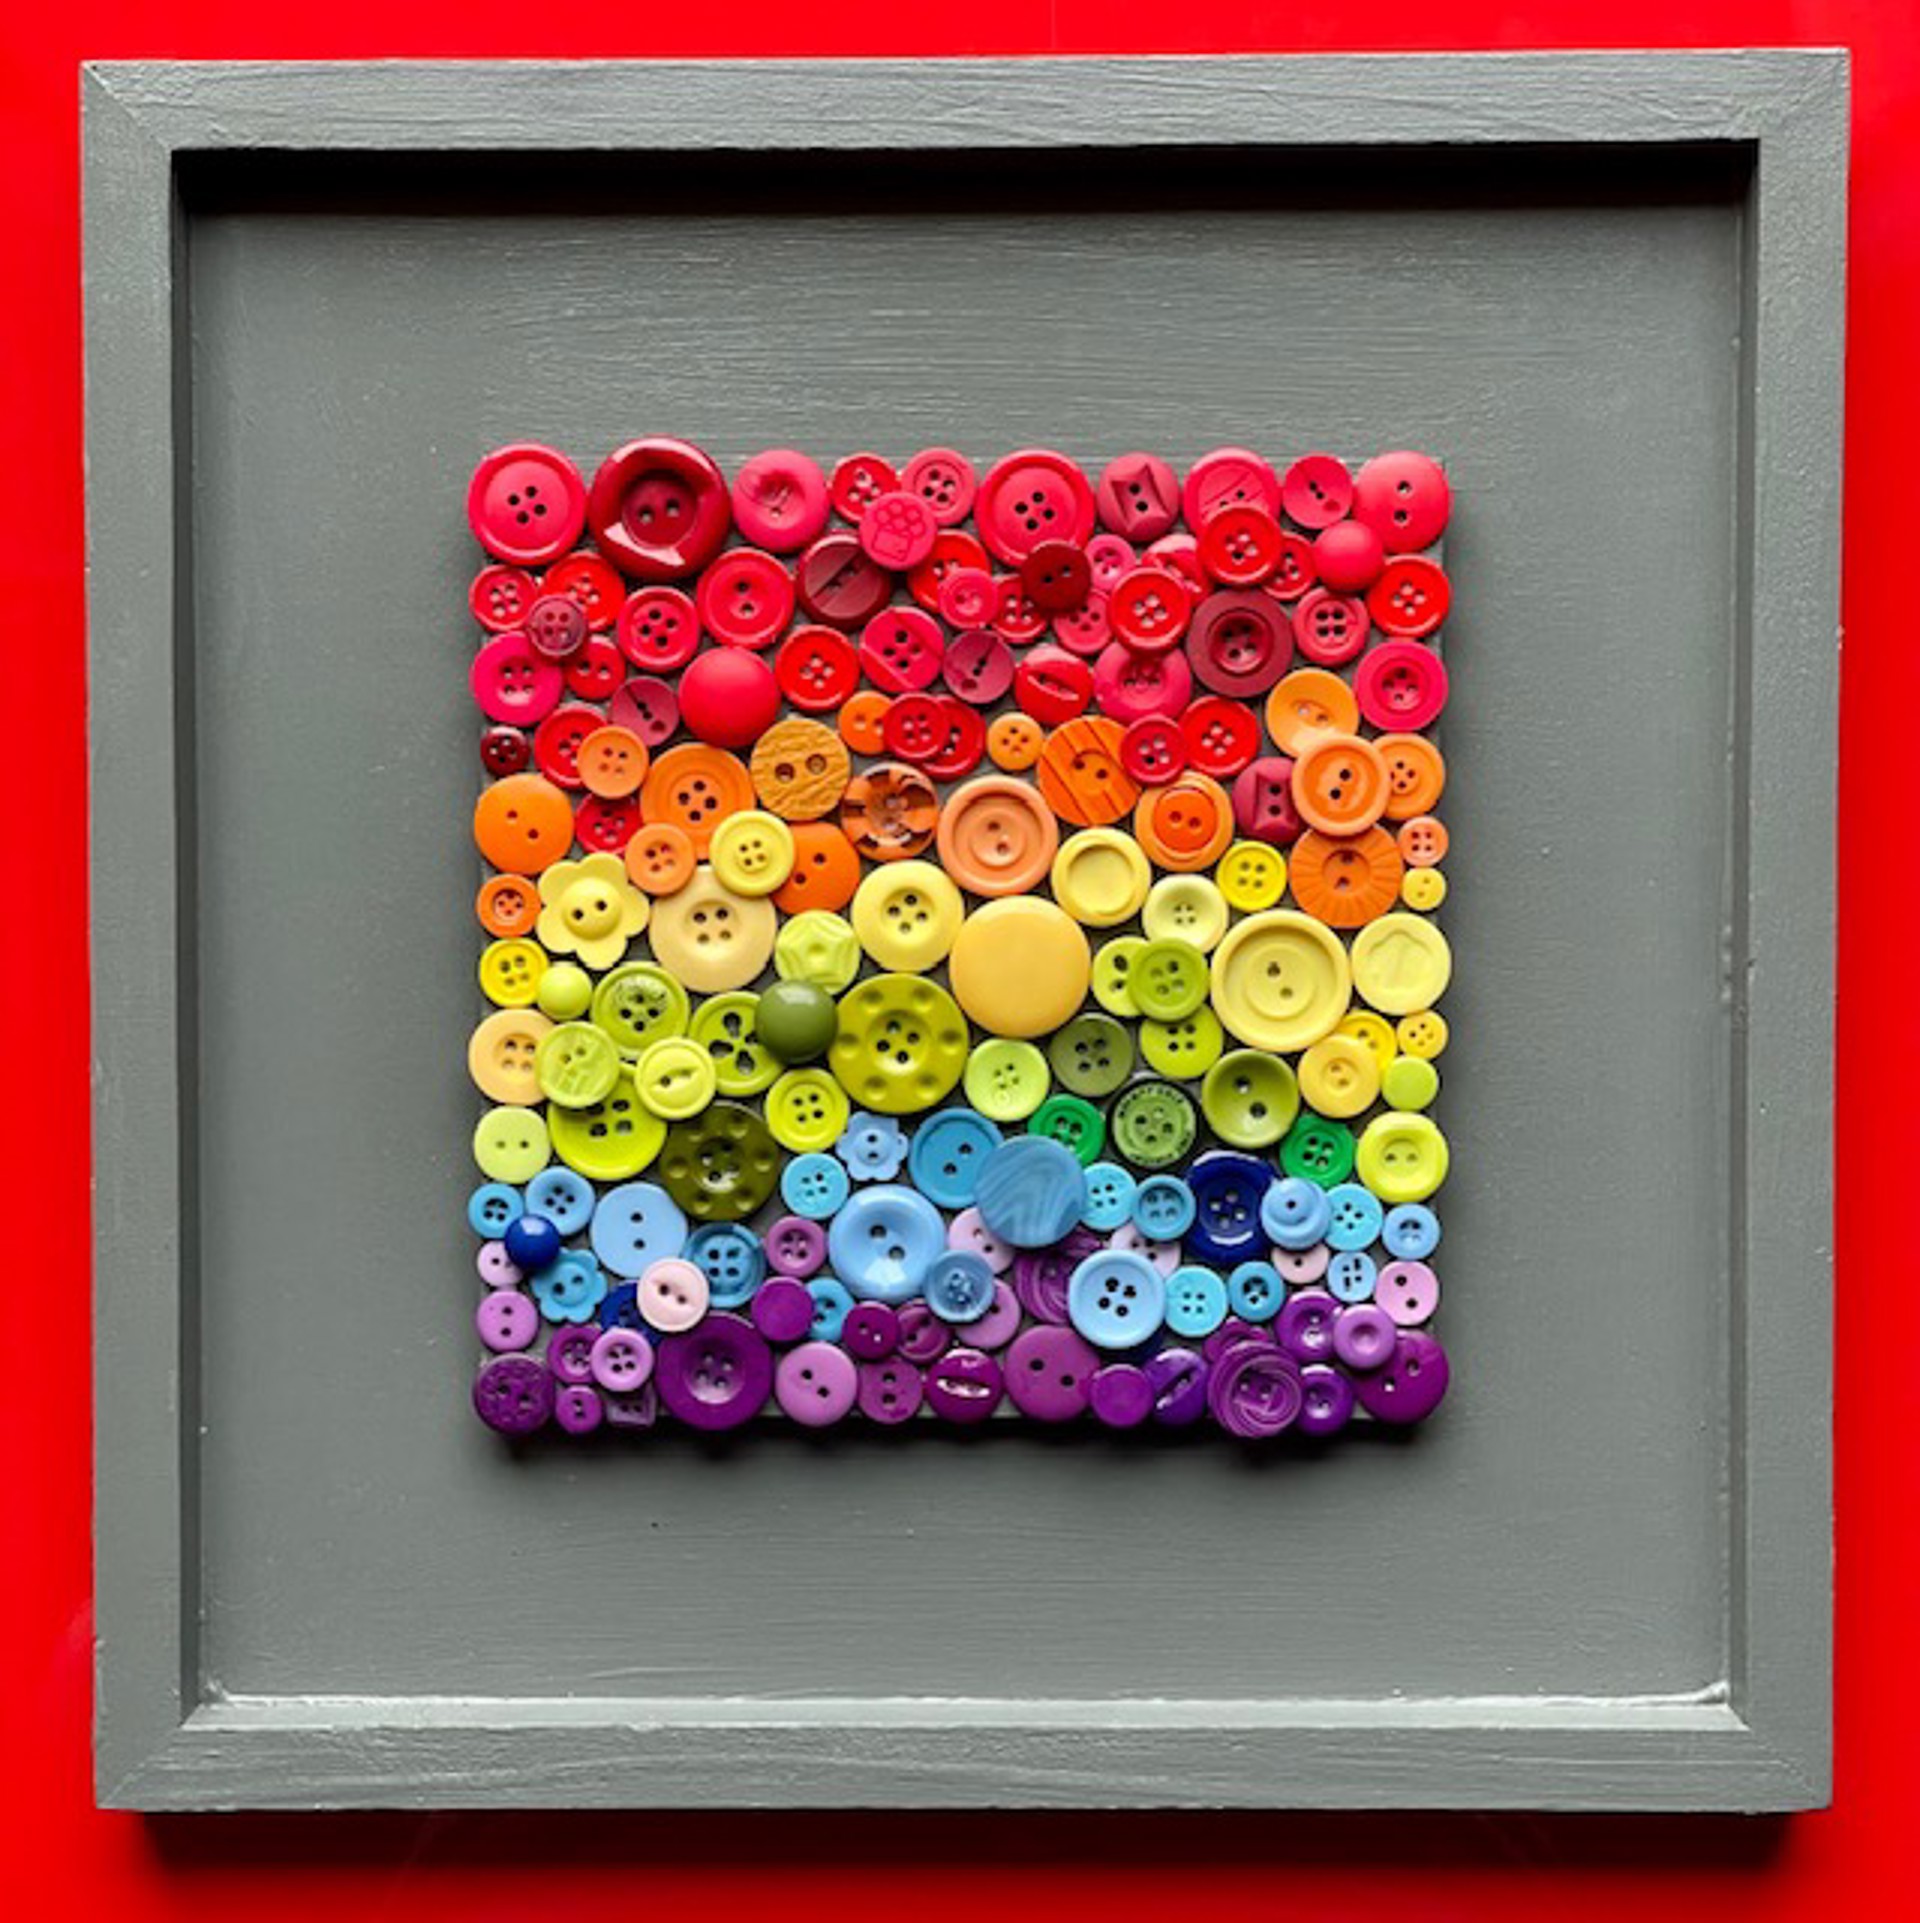 Rainbow Mosaic, by Veena Raj by Visiting Artists